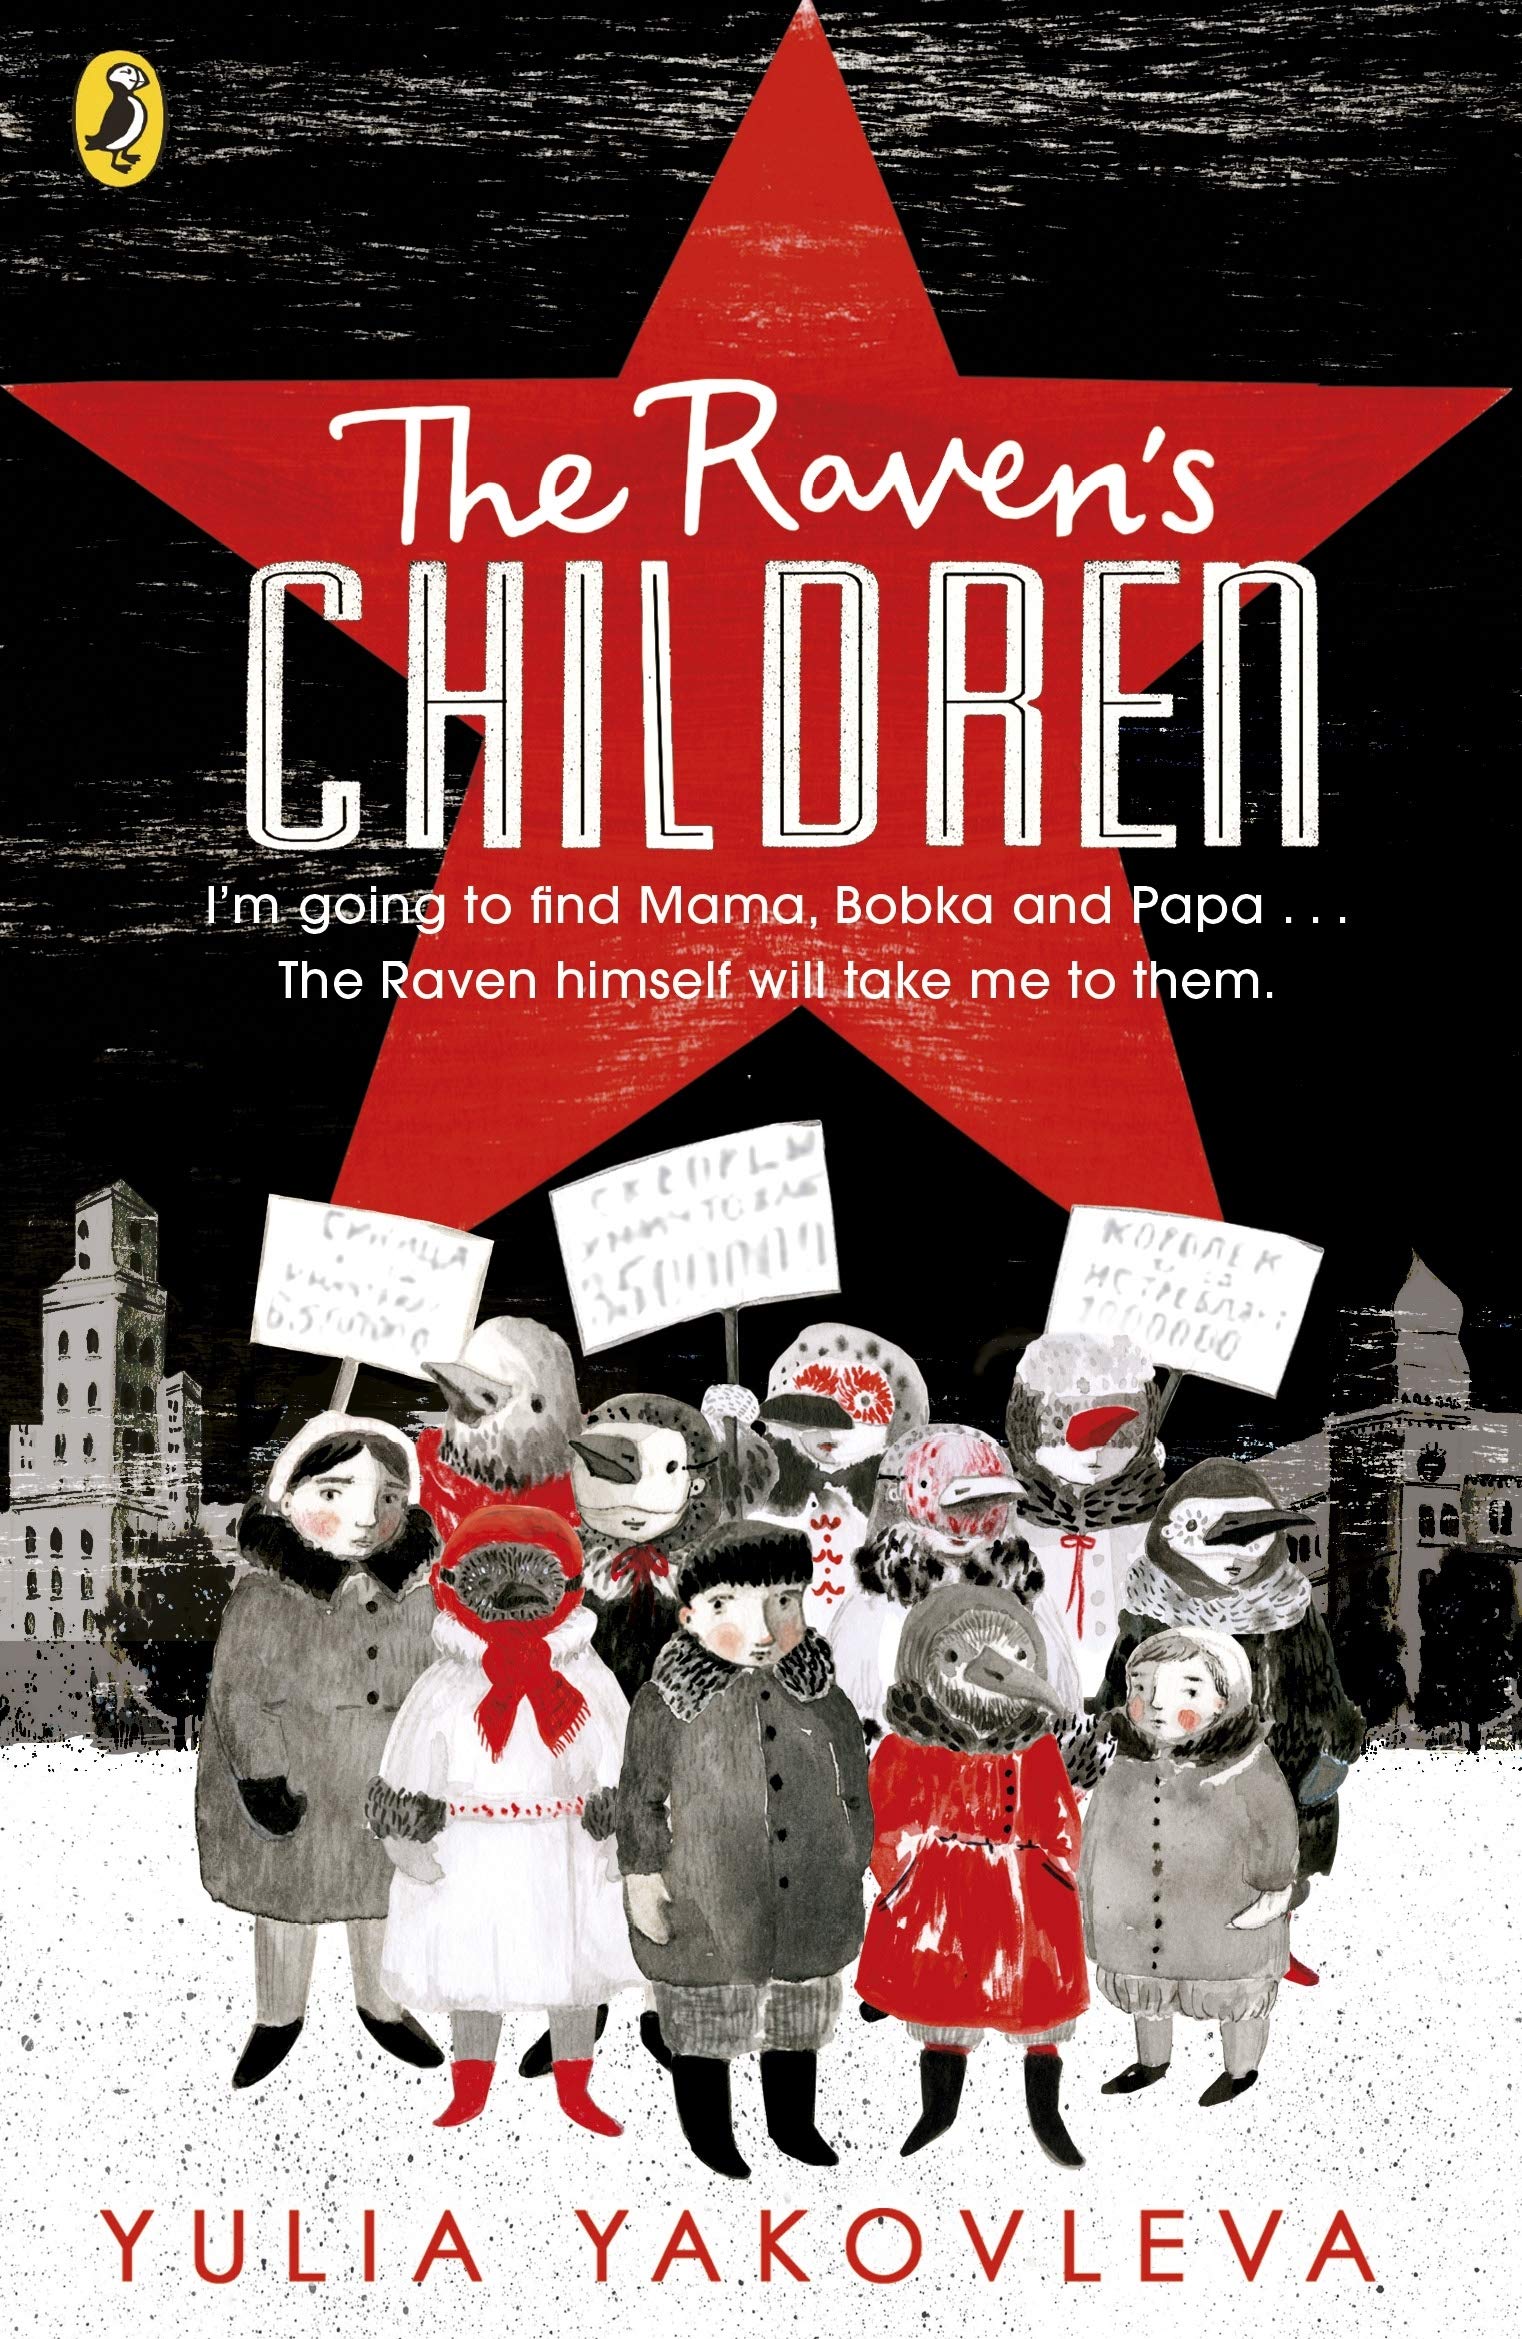 The Raven's Children | Yulia Yakovleva image0